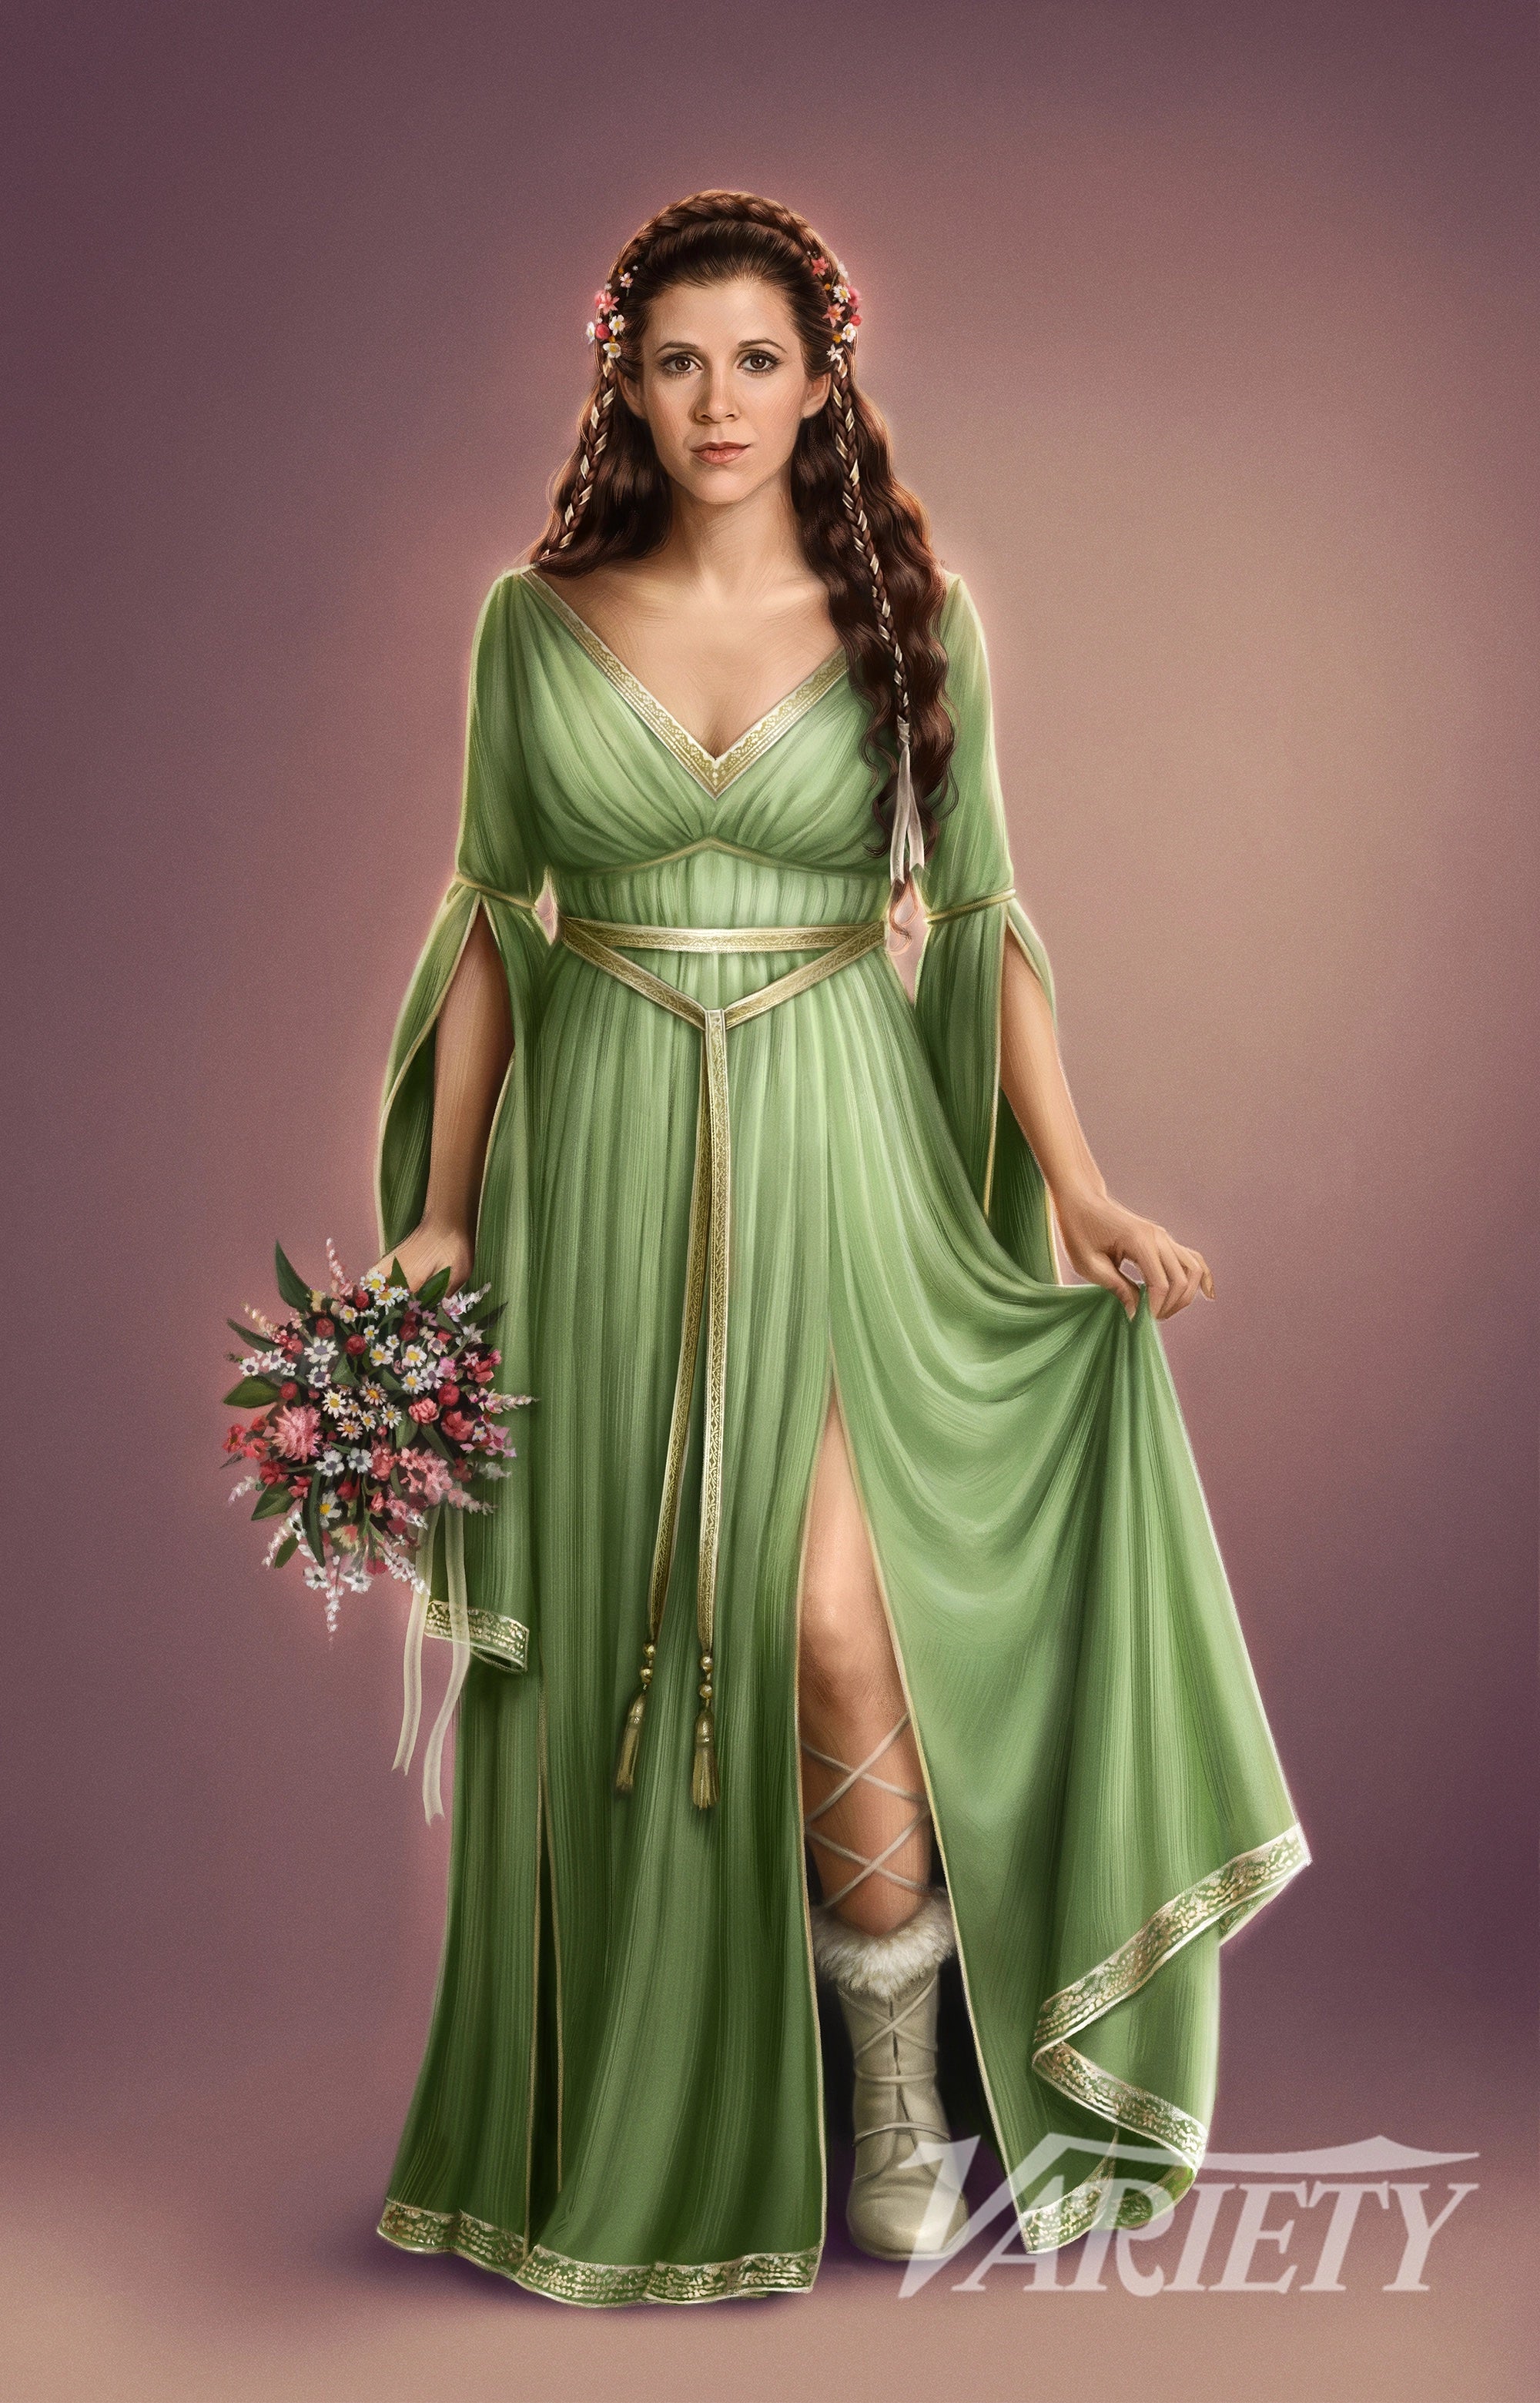 Princess Leia concept art by Tara Phillips (Image: Lucasfilm/Variety)